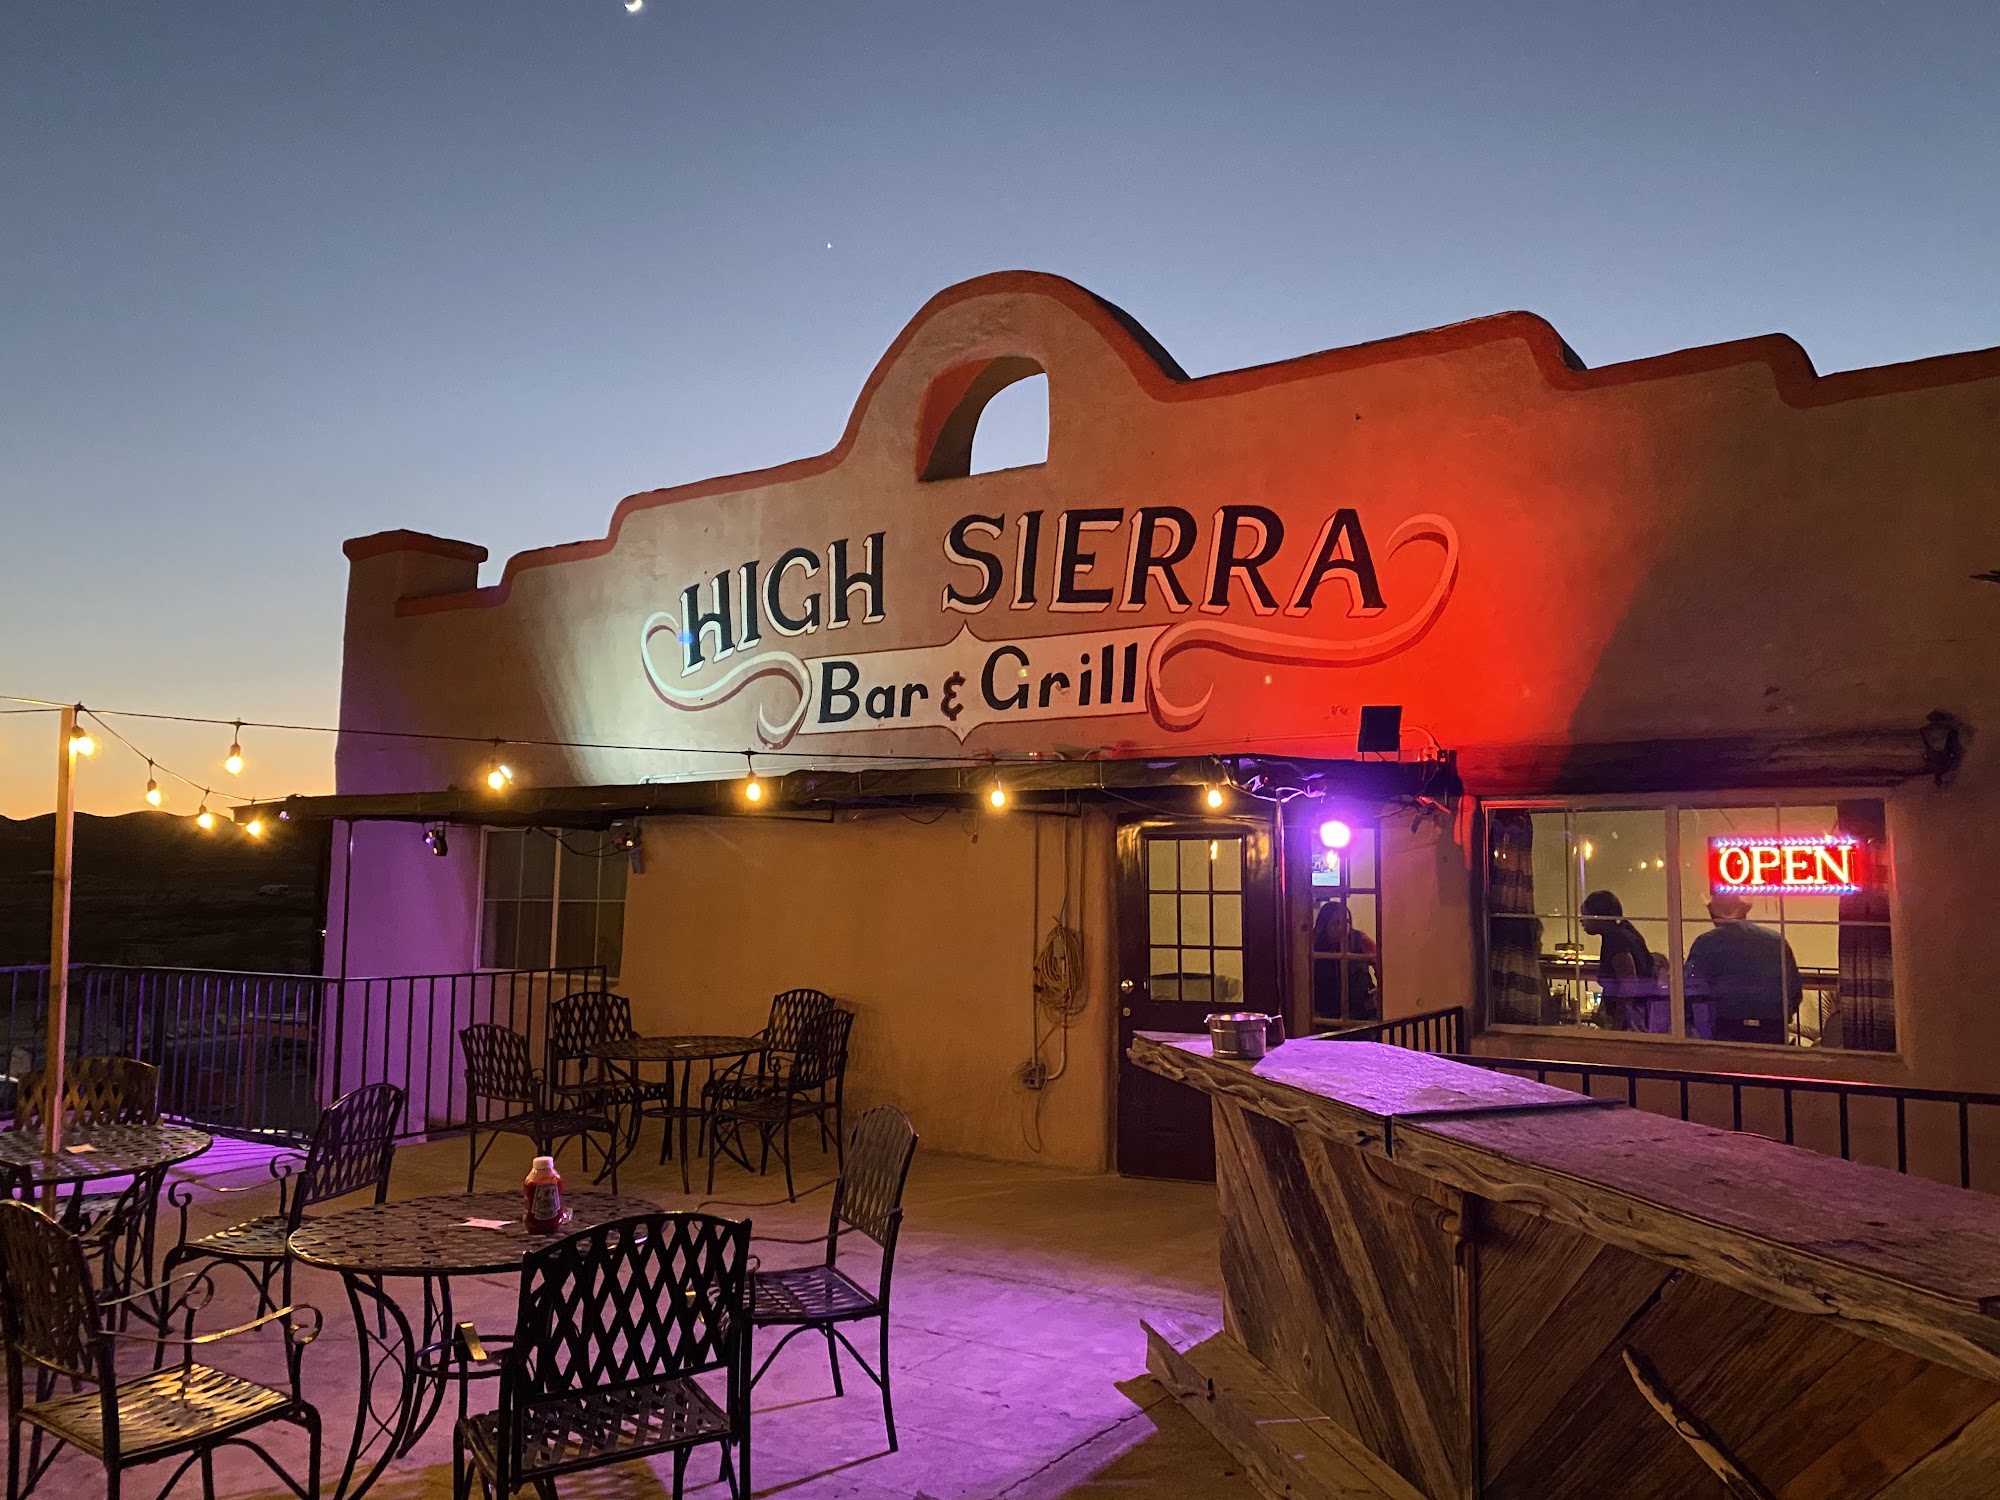 High Sierra Bar & Grill